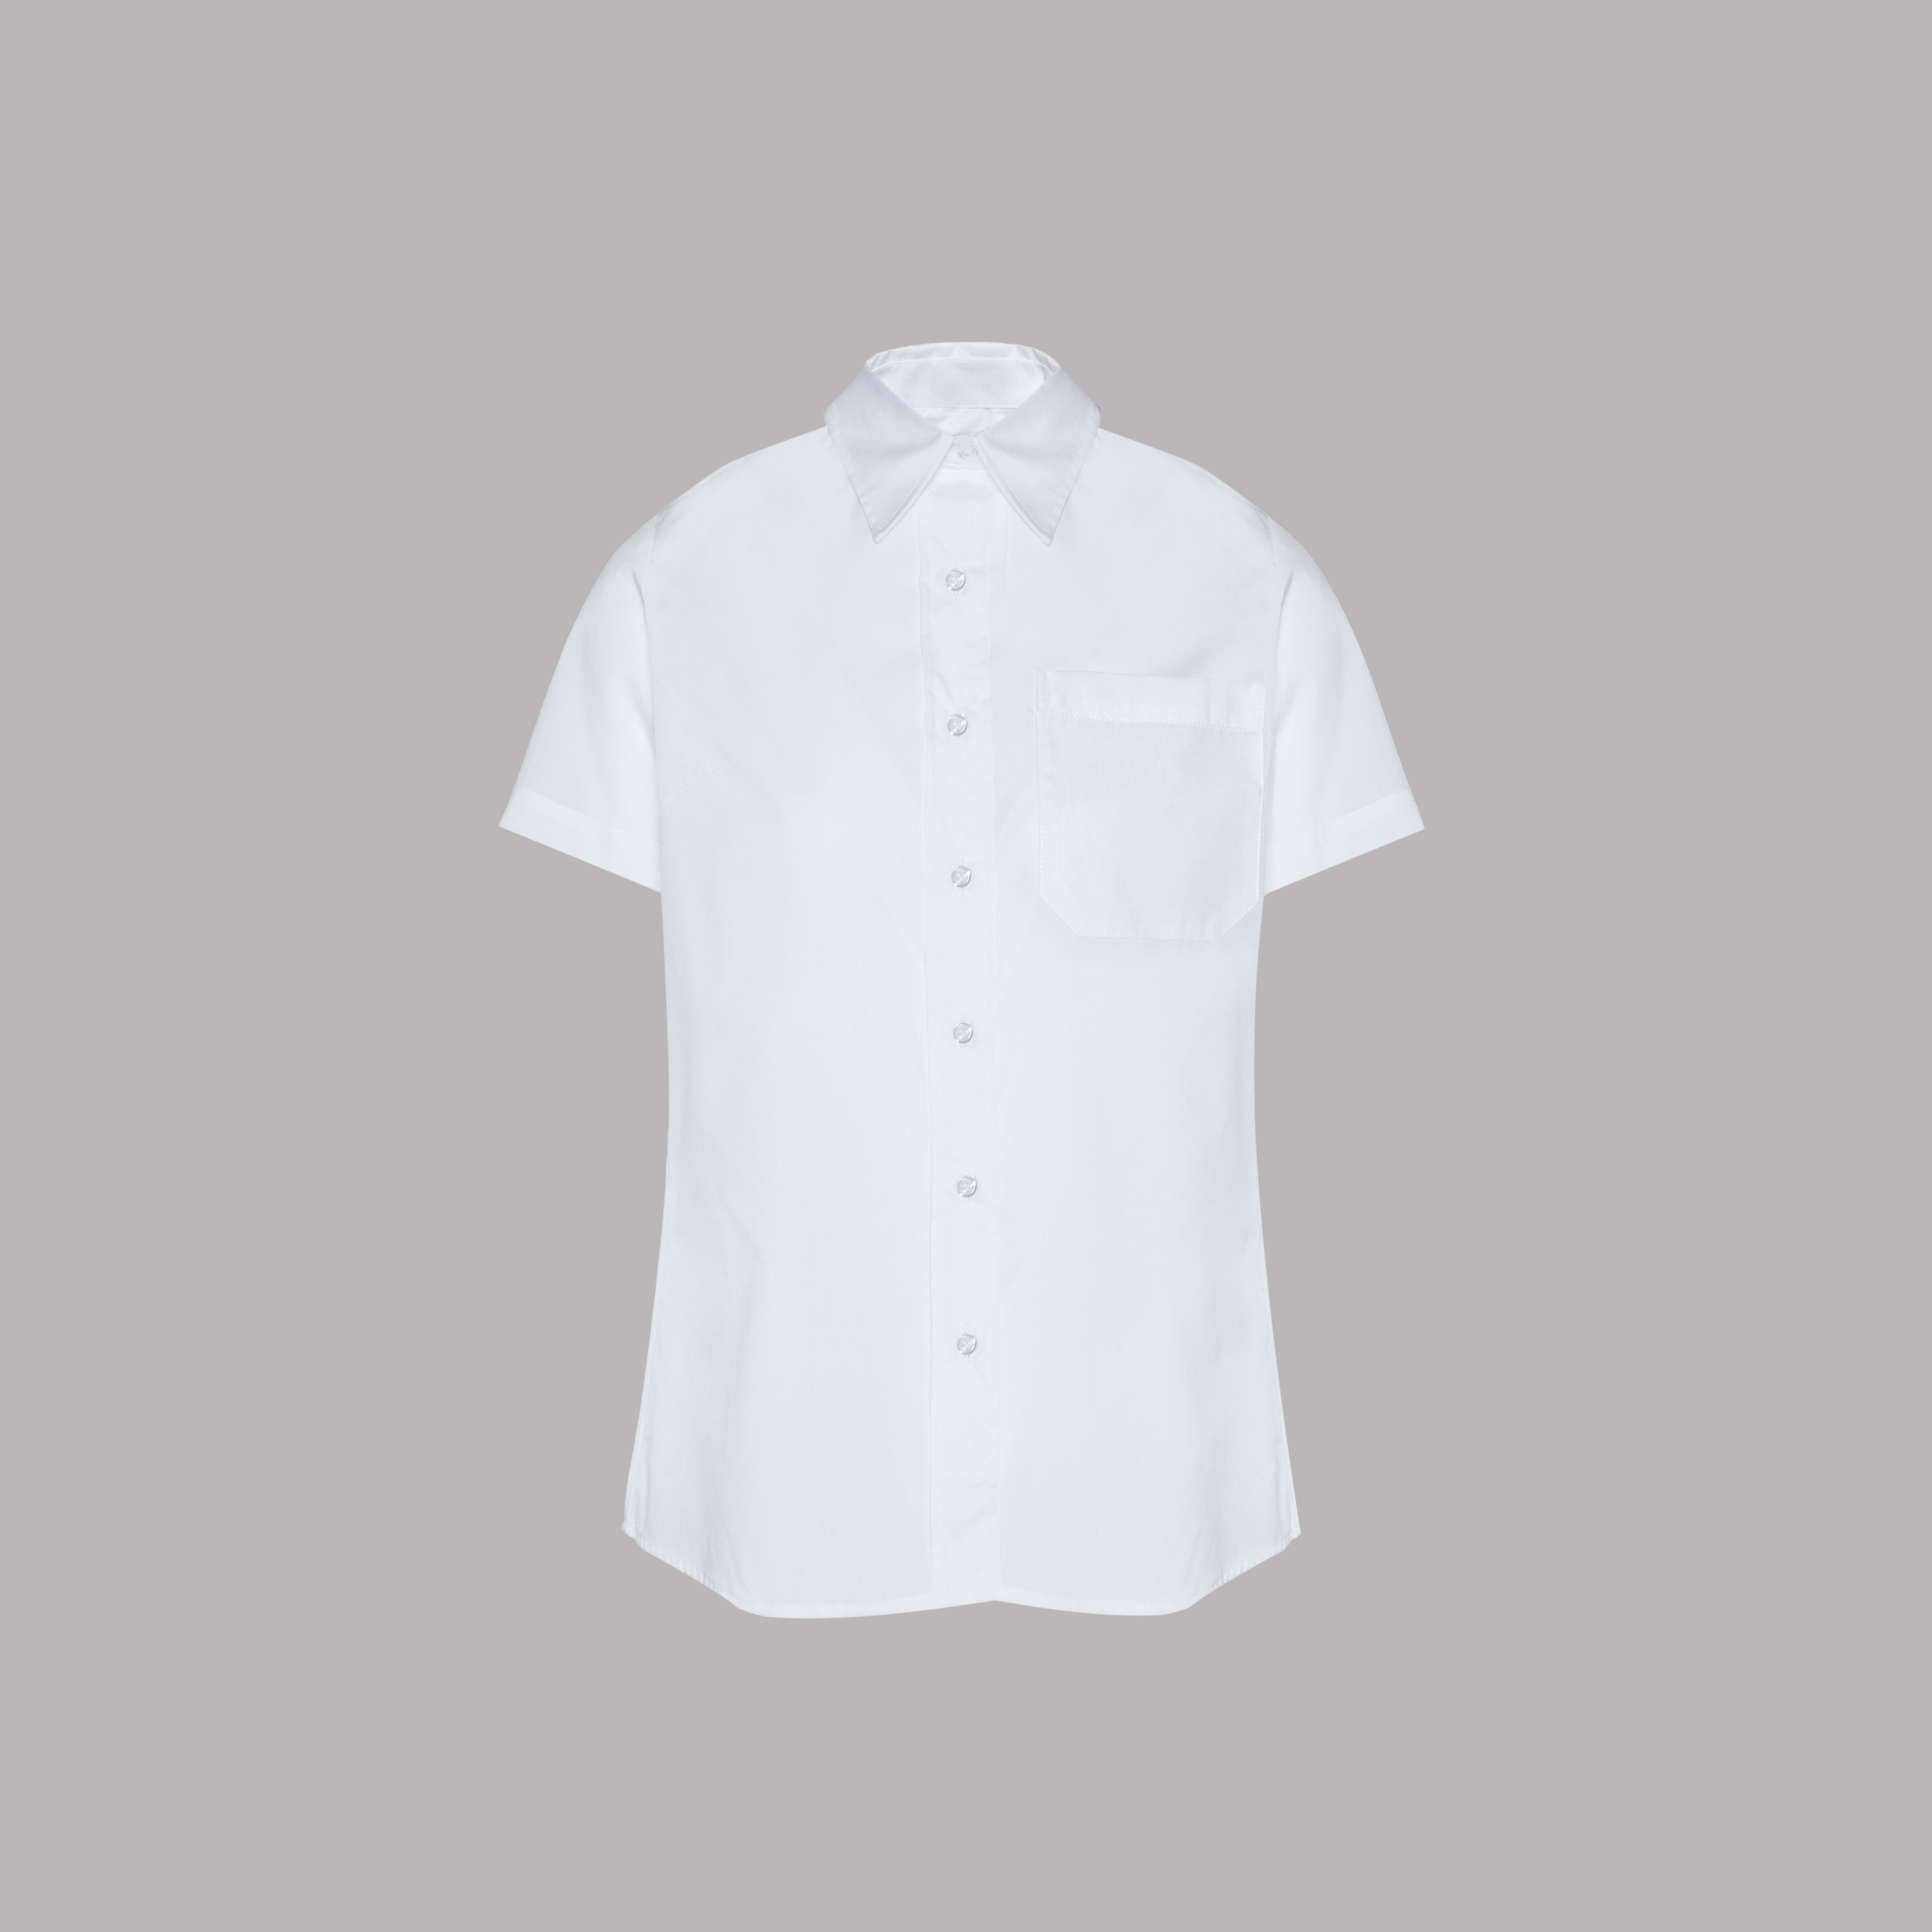 Camisa de Manga Curta de Senhora na cor Branca